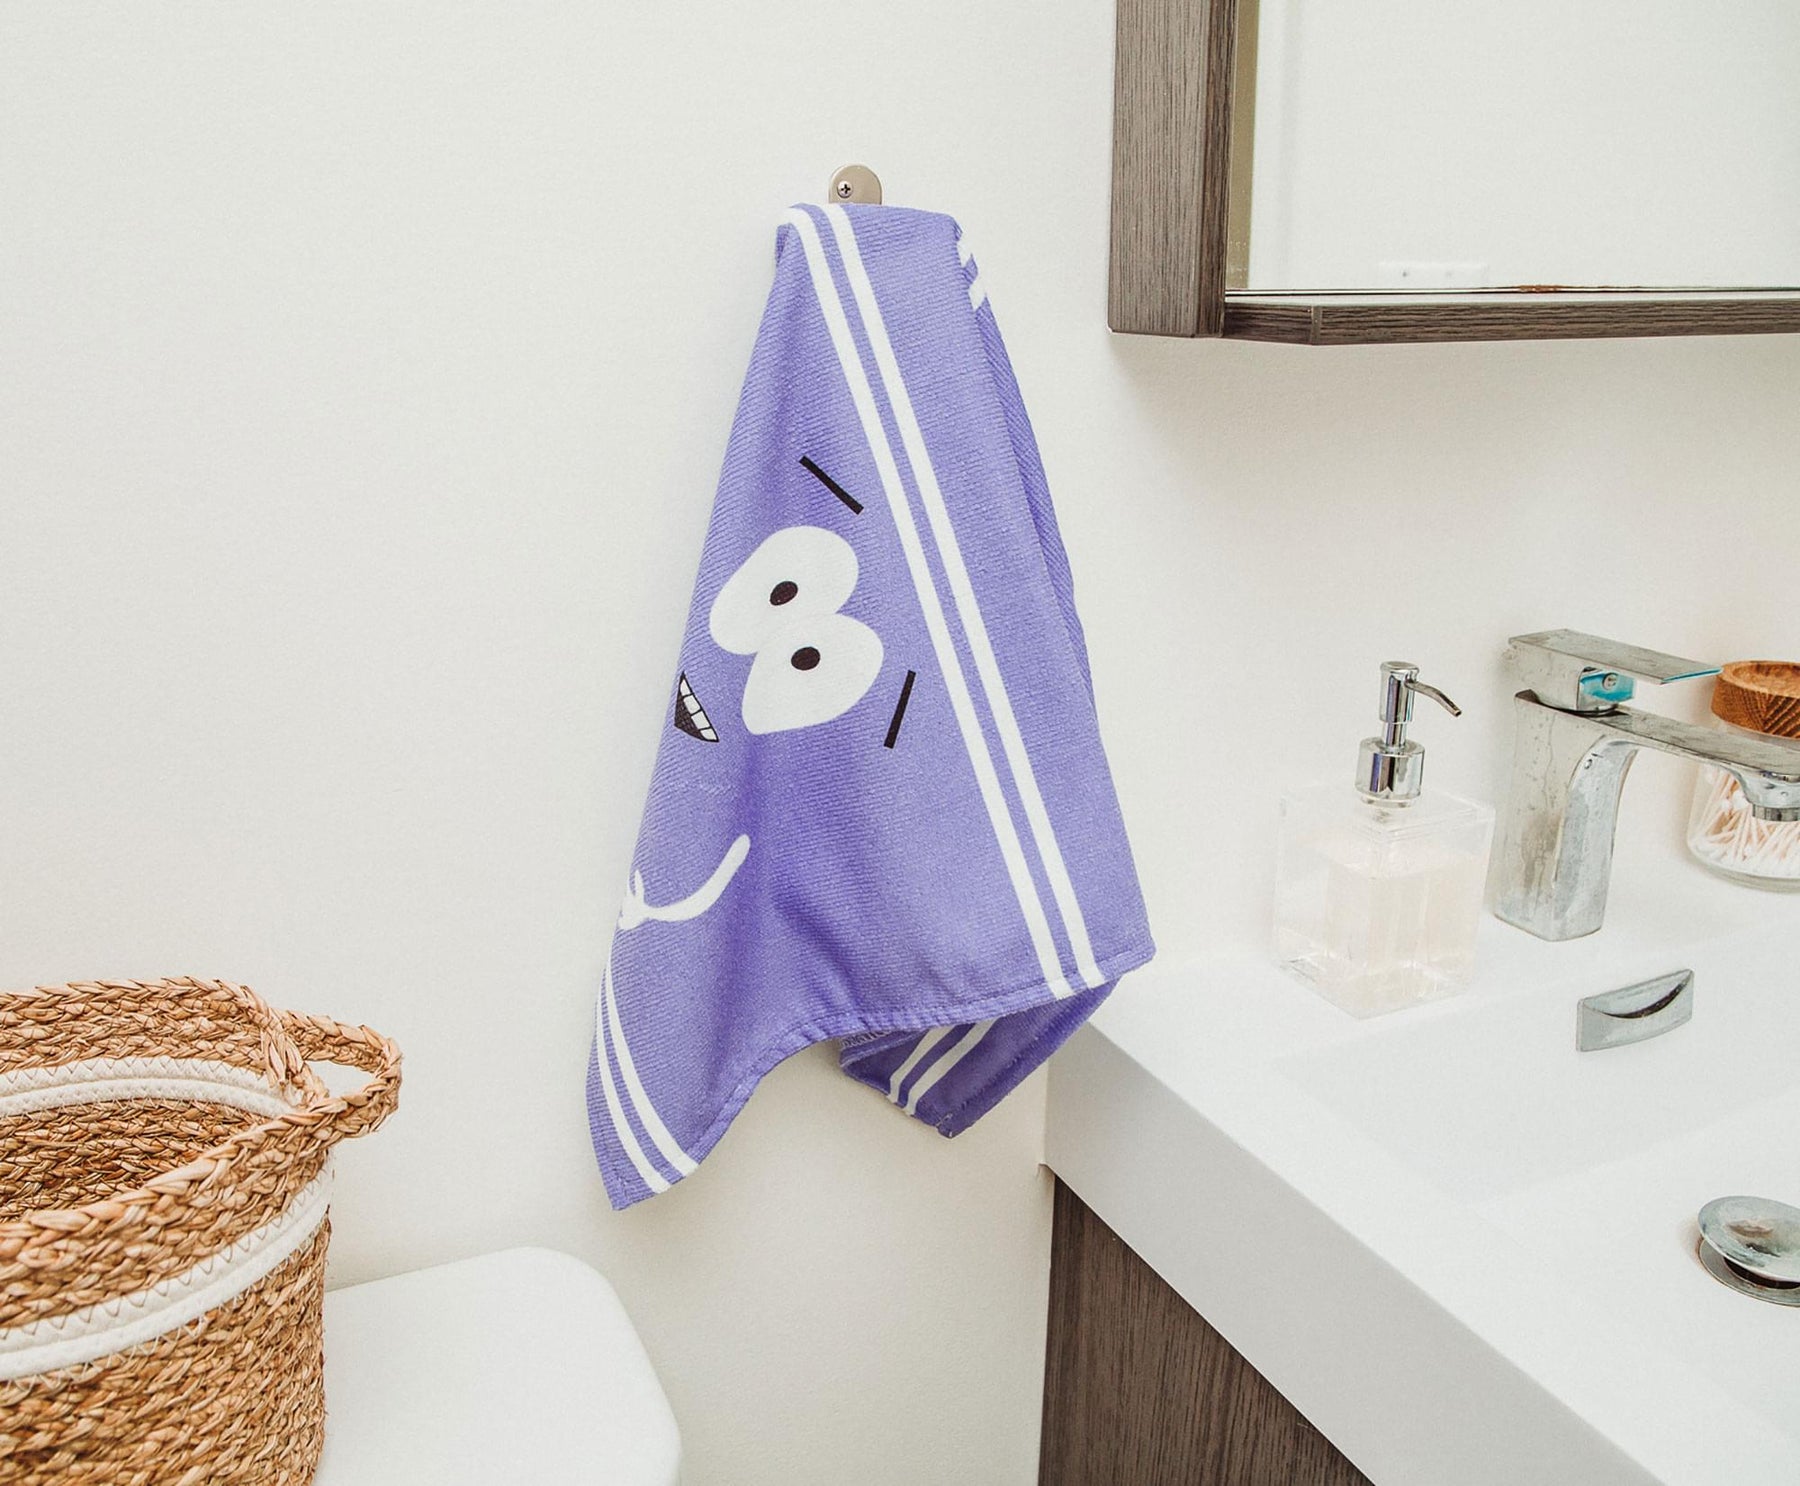 South Park Towelie Cotton Hand Towel | 24 x 14 inches